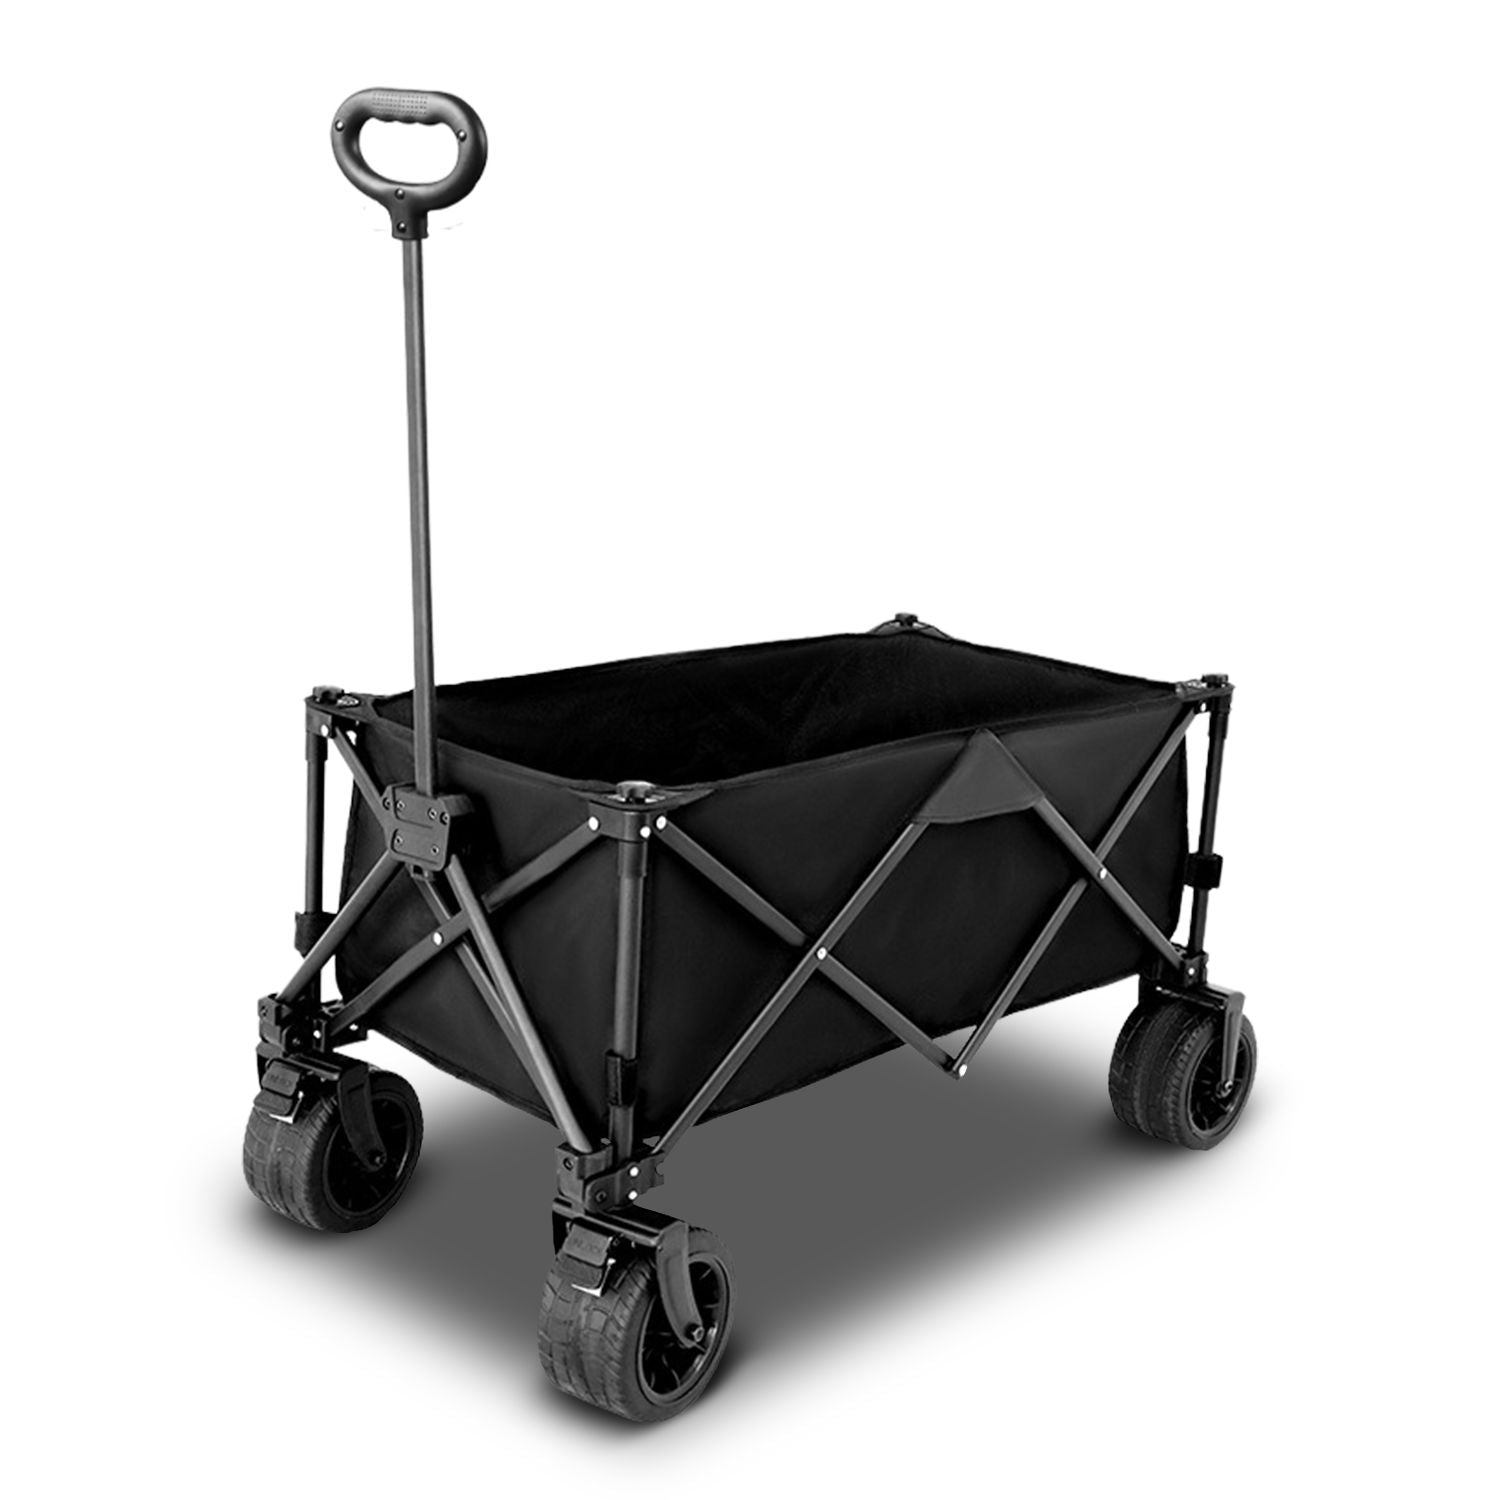 KILIROO Folding Wagon Trolley Cart (Black)